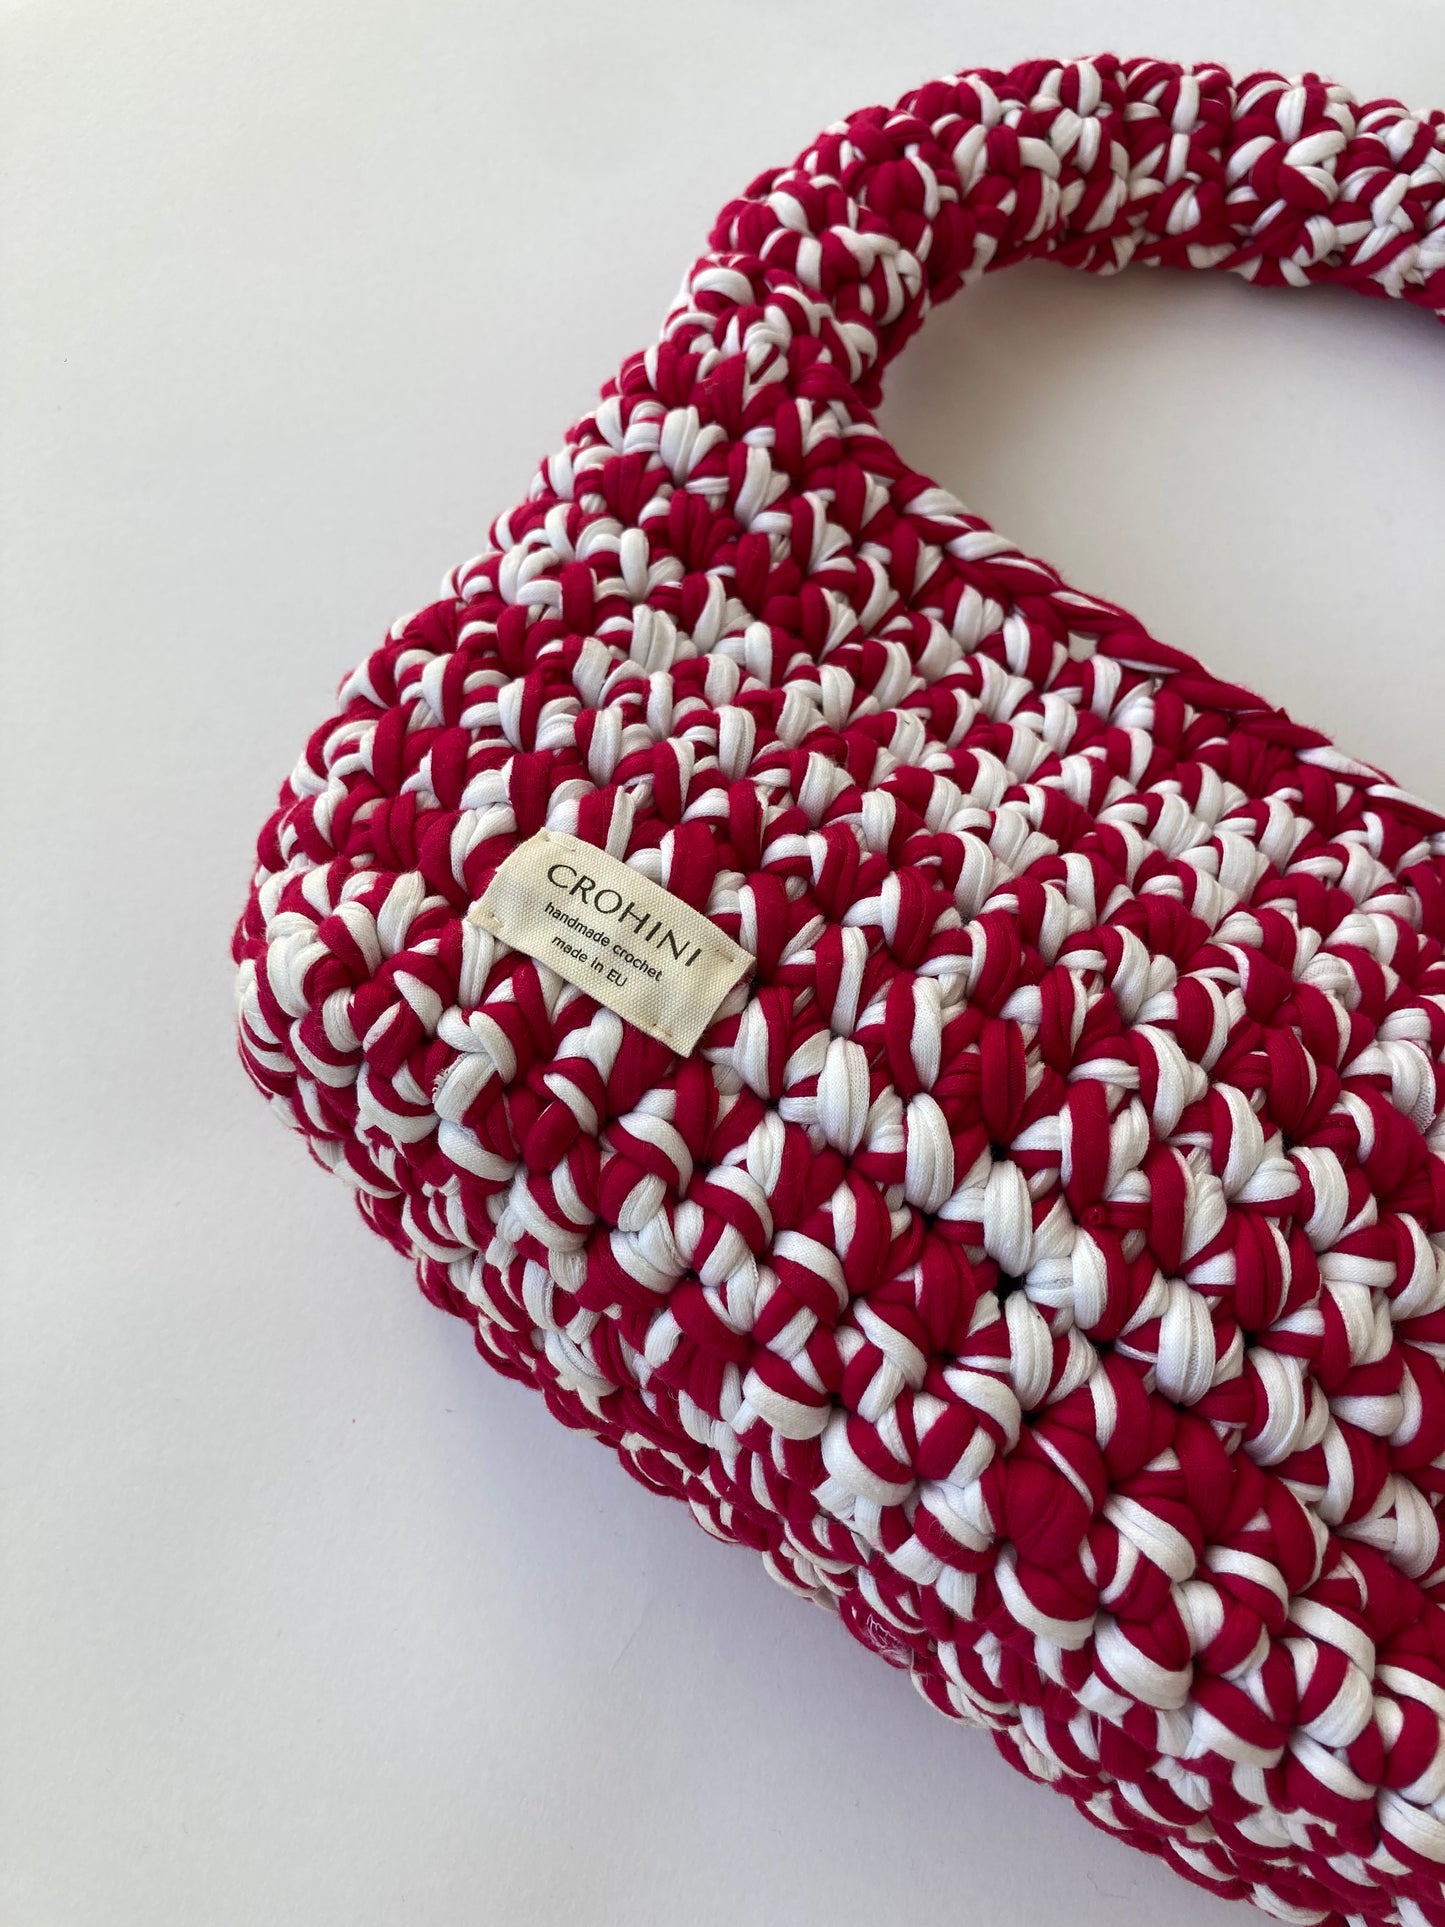 Medium LIINA White and Red Crochet Bag